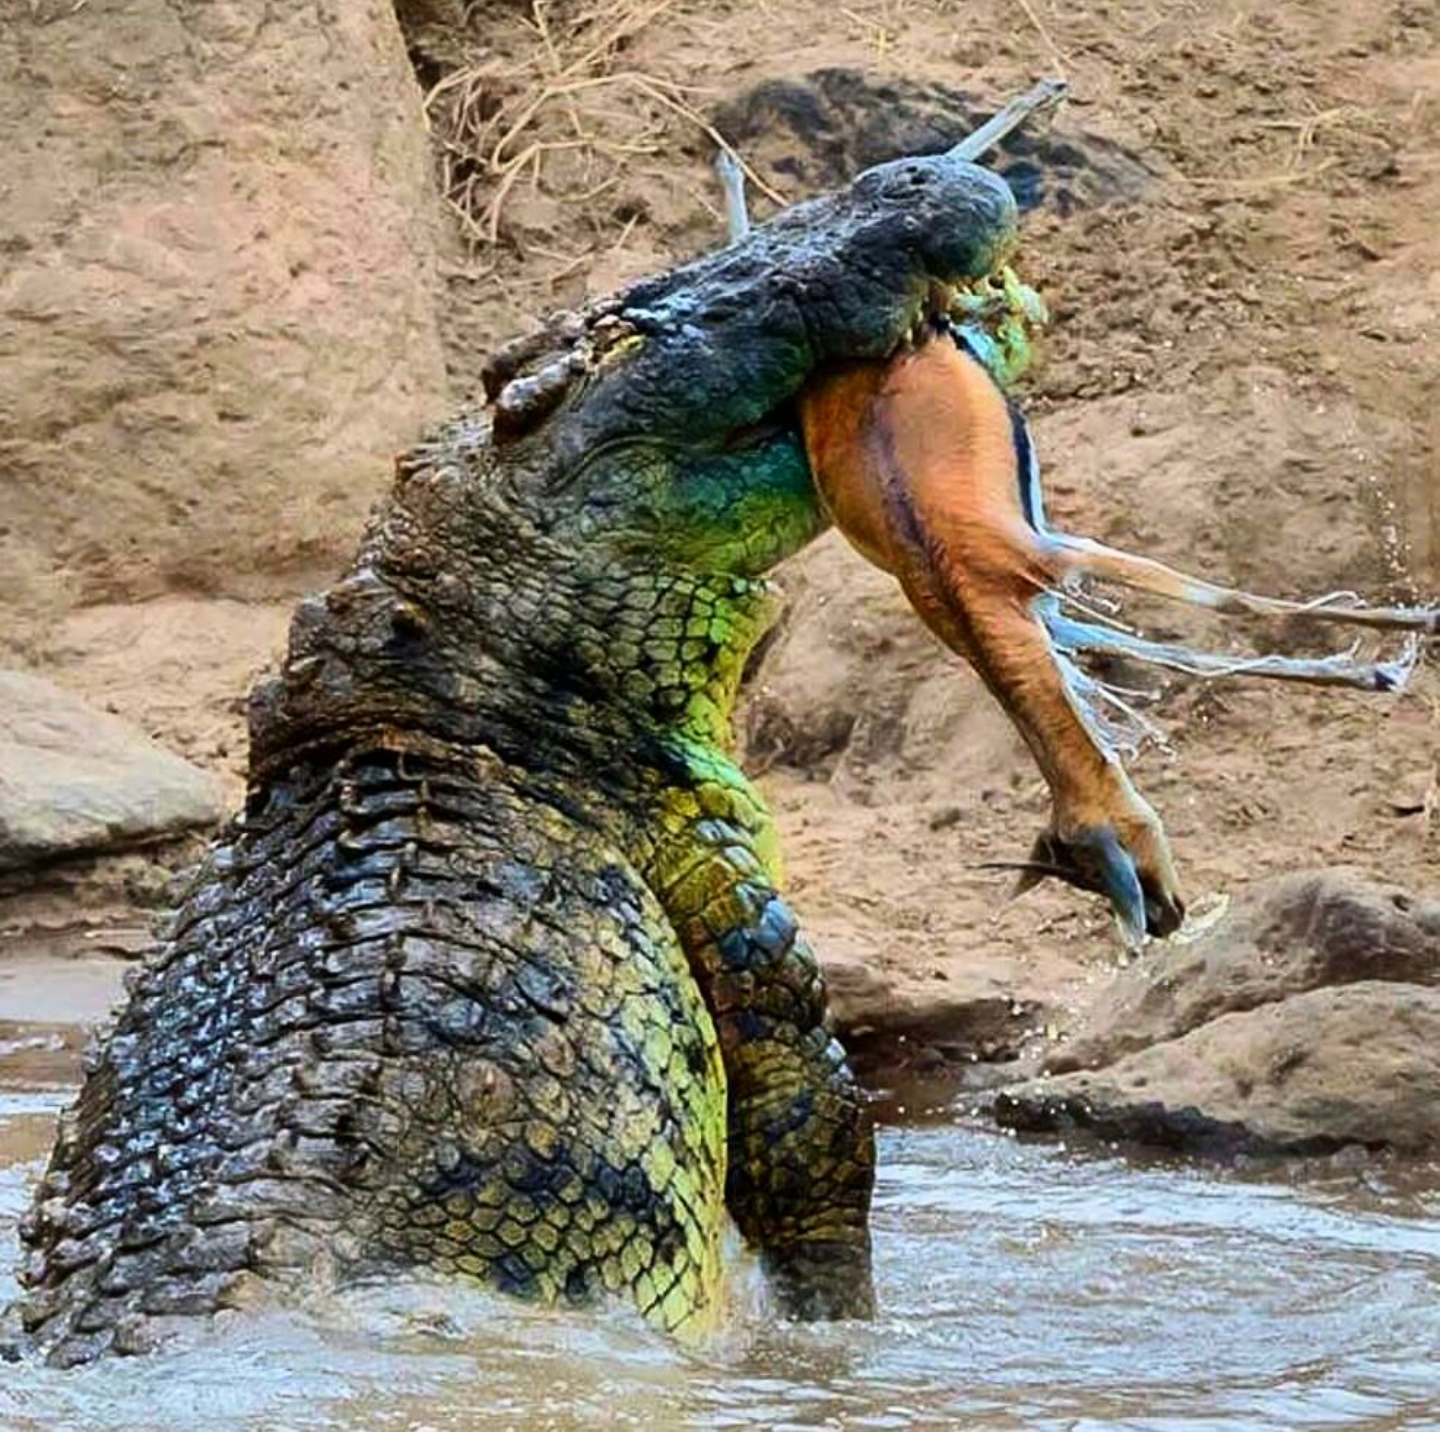 The strength of a crocodile 